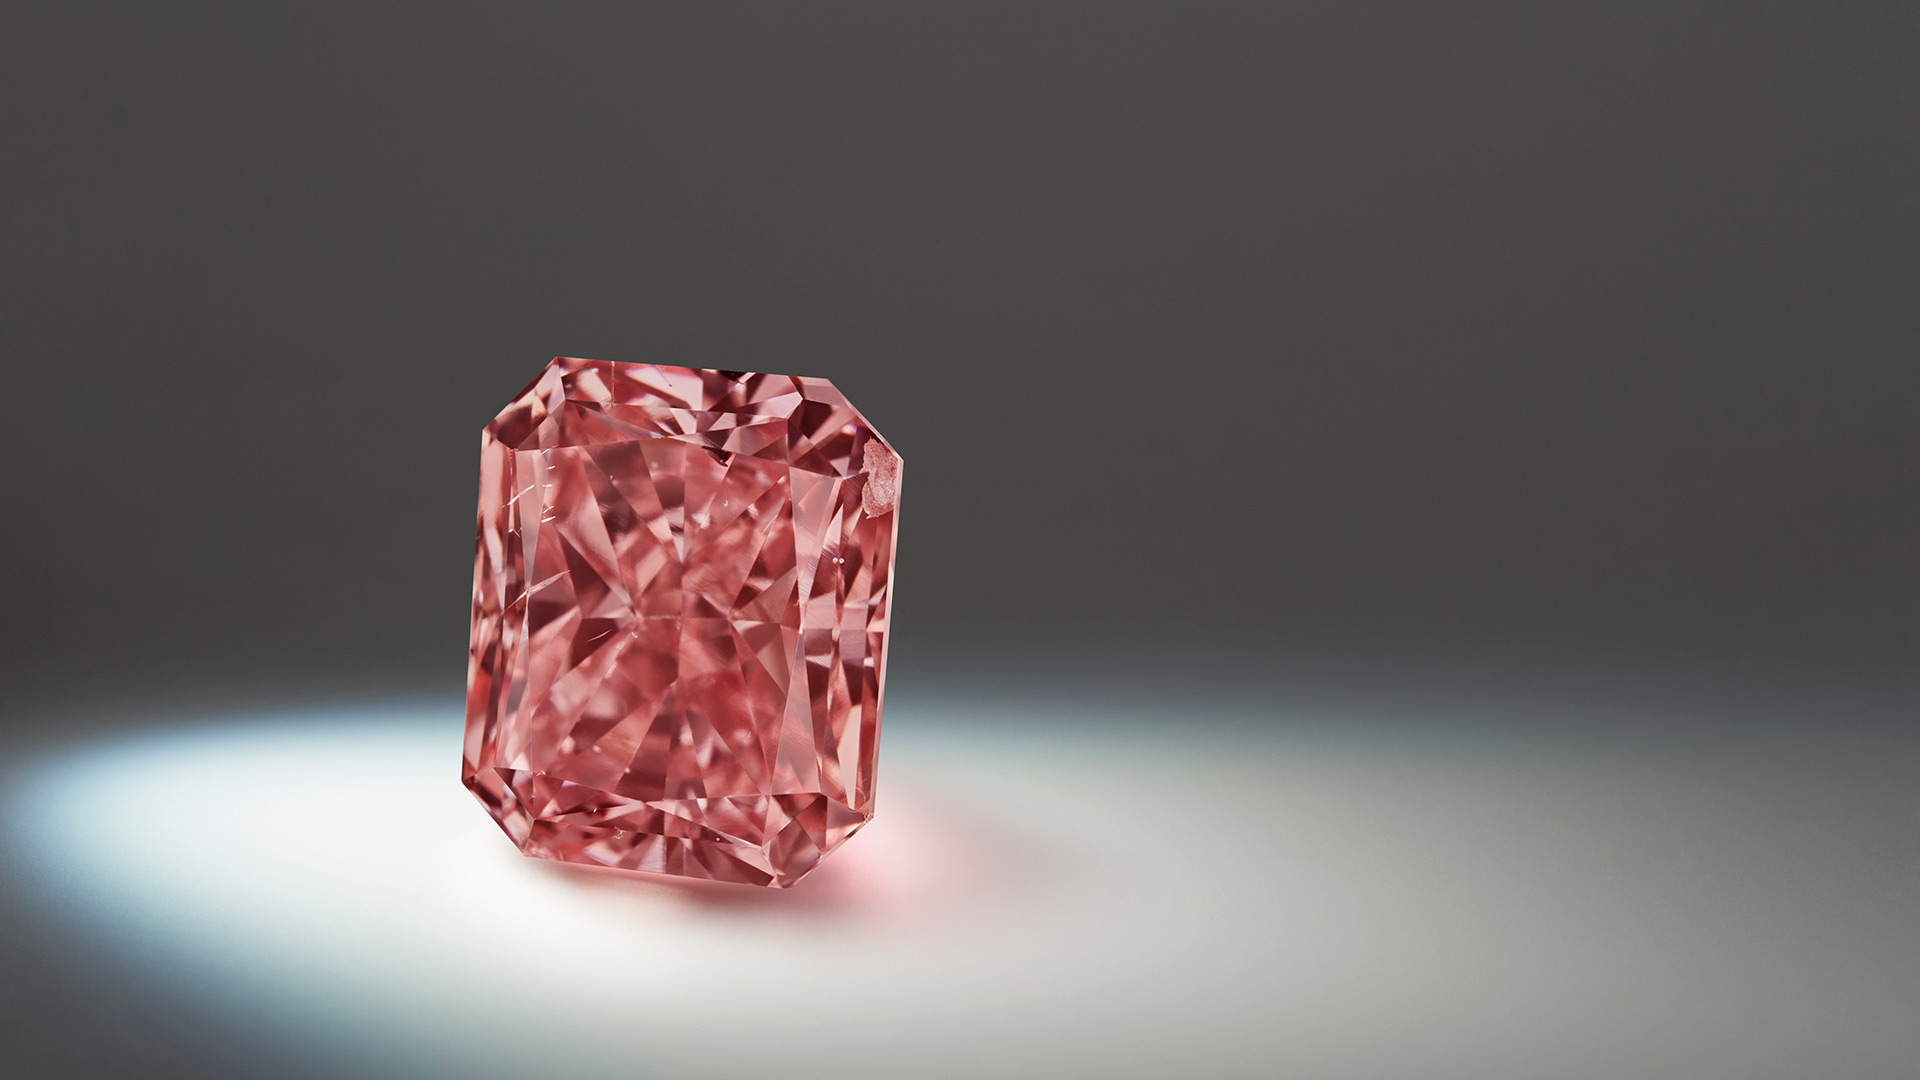 Lot 1, Argyle Eclipse™ a 3.47 carat, Fancy Intense Pink, radiant diamond